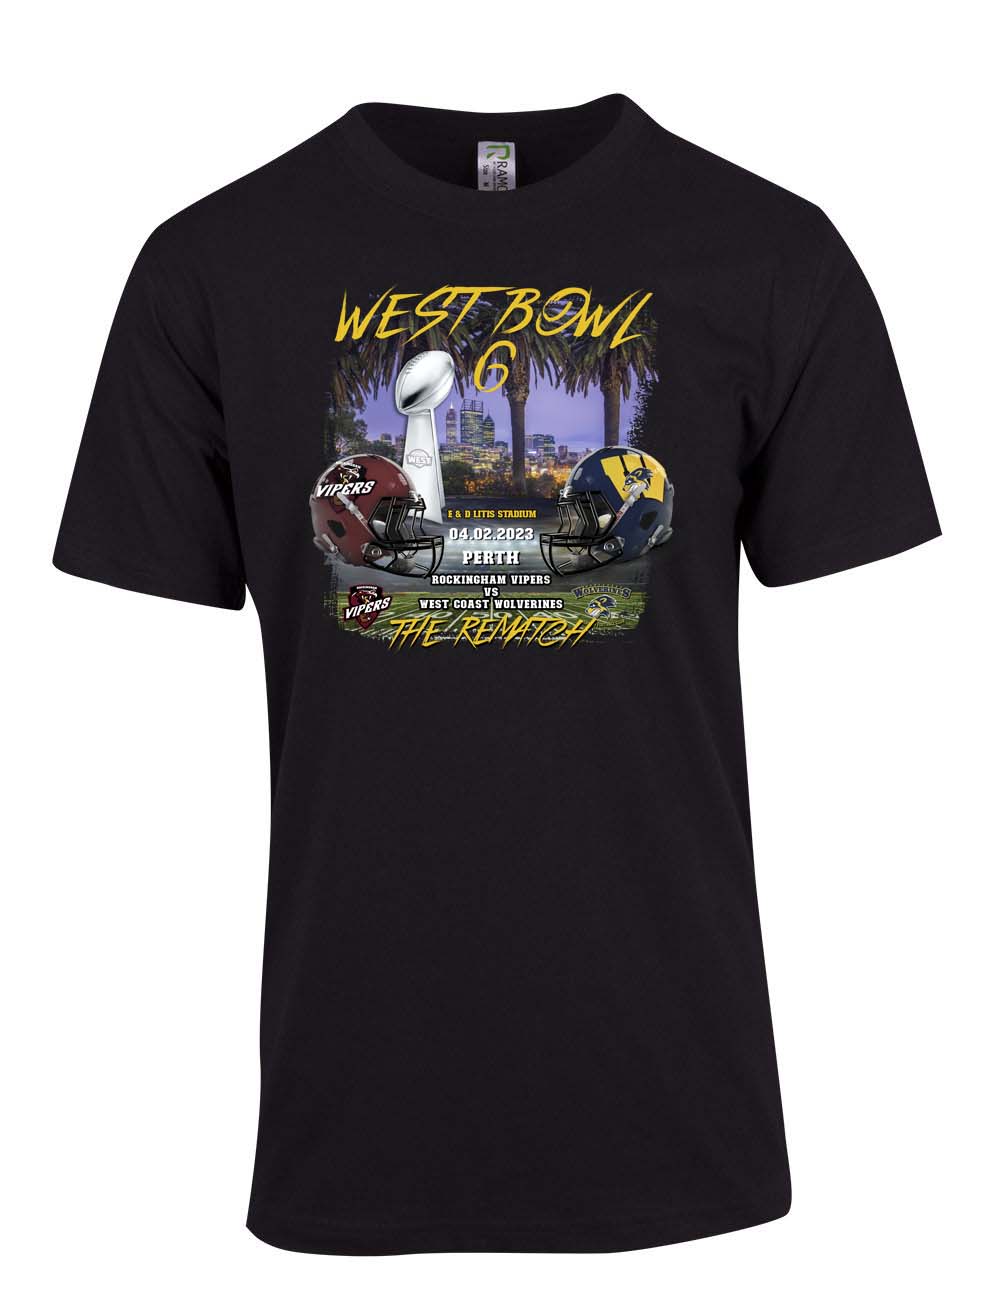 West Bowl 6 Women's promo Shirt